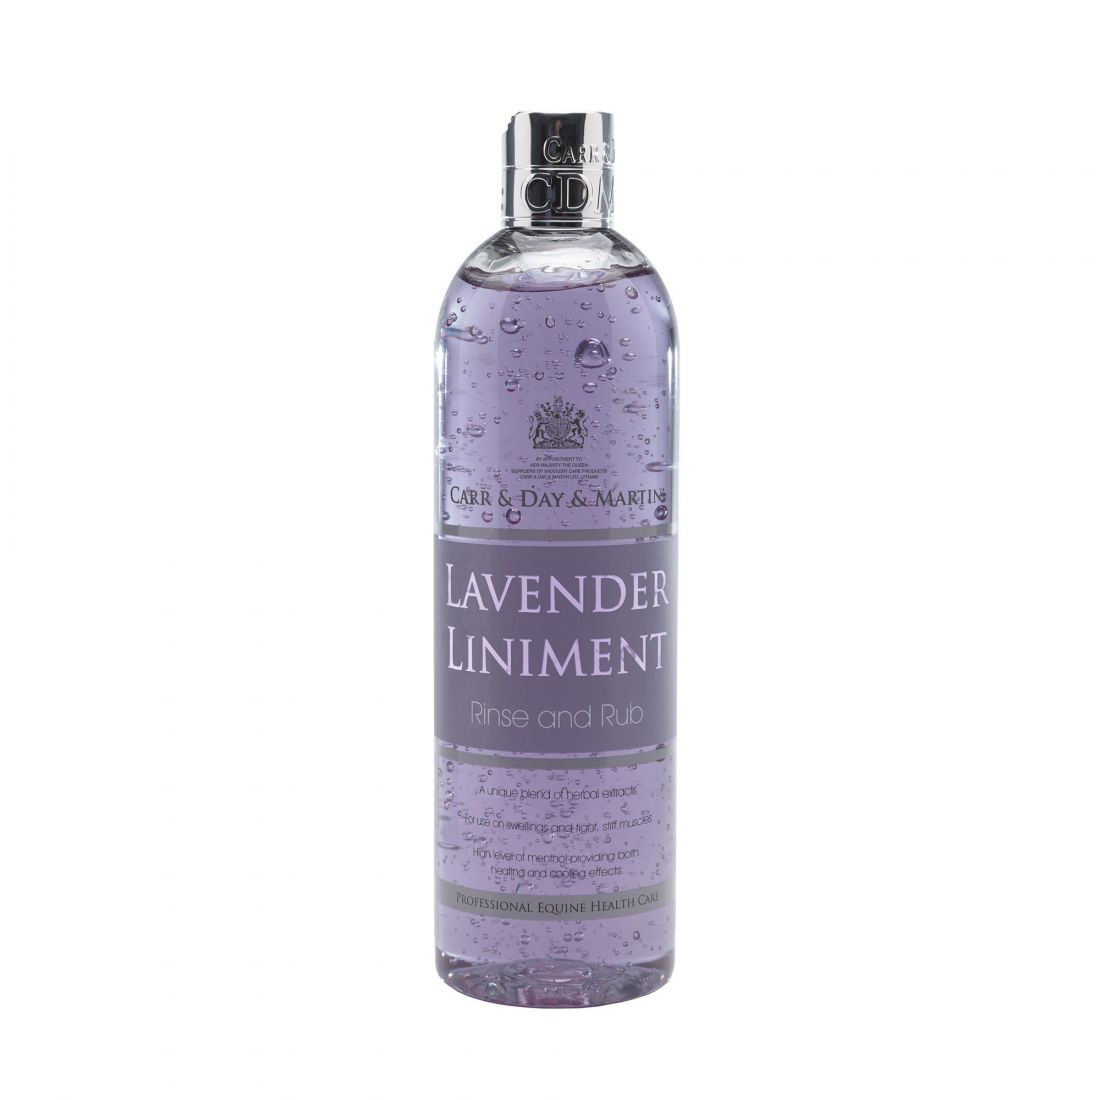 Lavender Liniment Rinse and Rub (Линимент двойного действия с шипами лаванды)